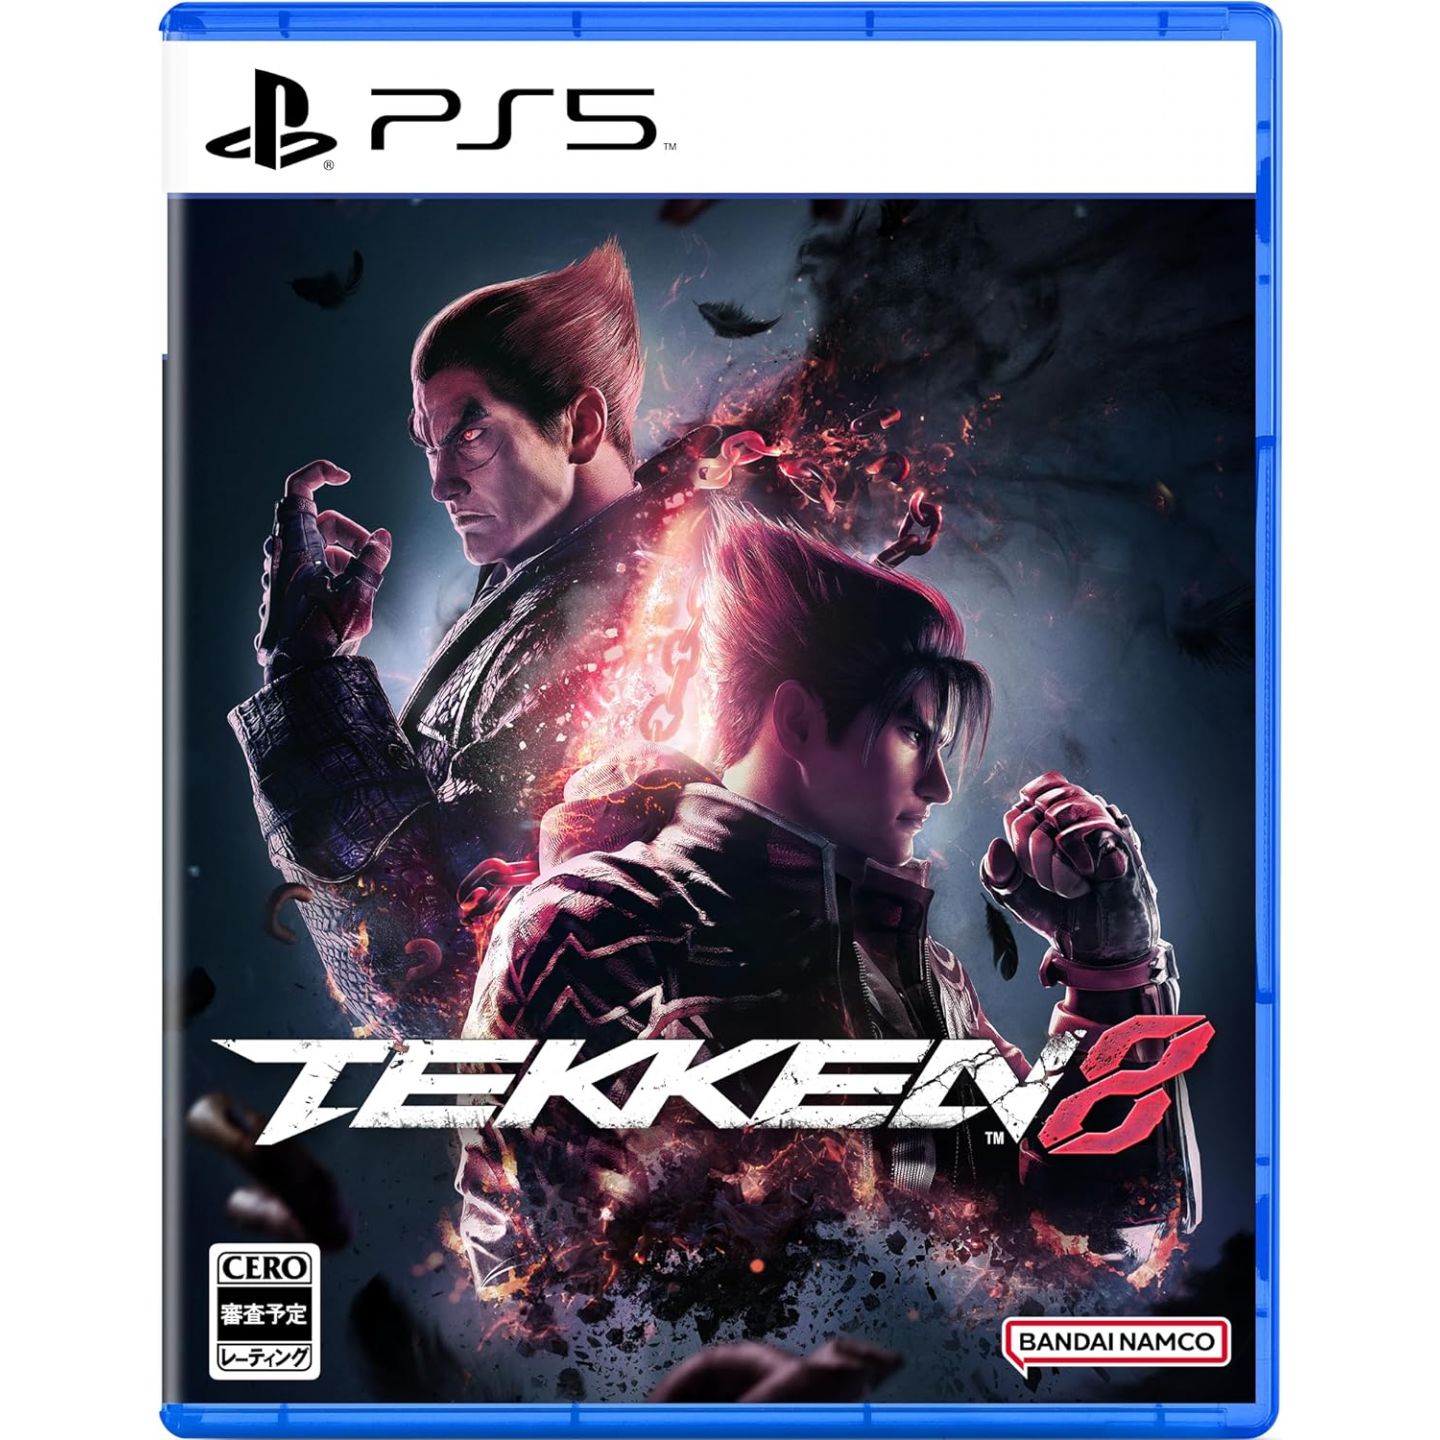  Tekken 7 PS4 - PlayStation 4 Standard Edition : TEKKEN 7: Video  Games